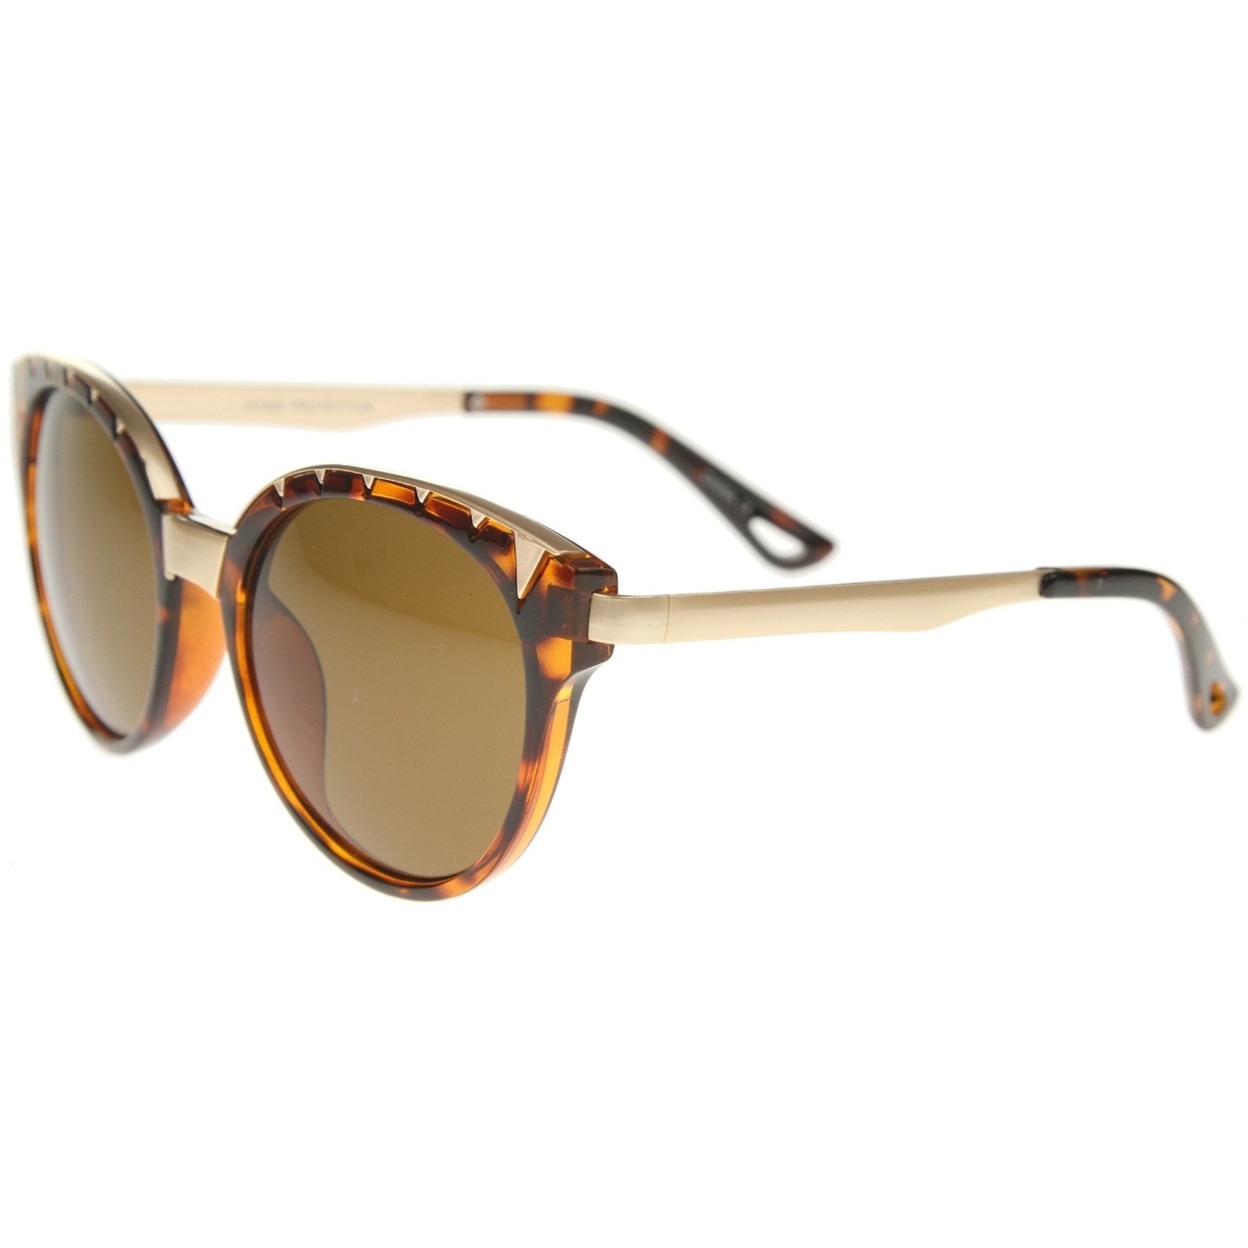 Women's Oversize Triangle Detail Round Cat Eye Sunglasses 55mm - Tortoise-Gold / Brown